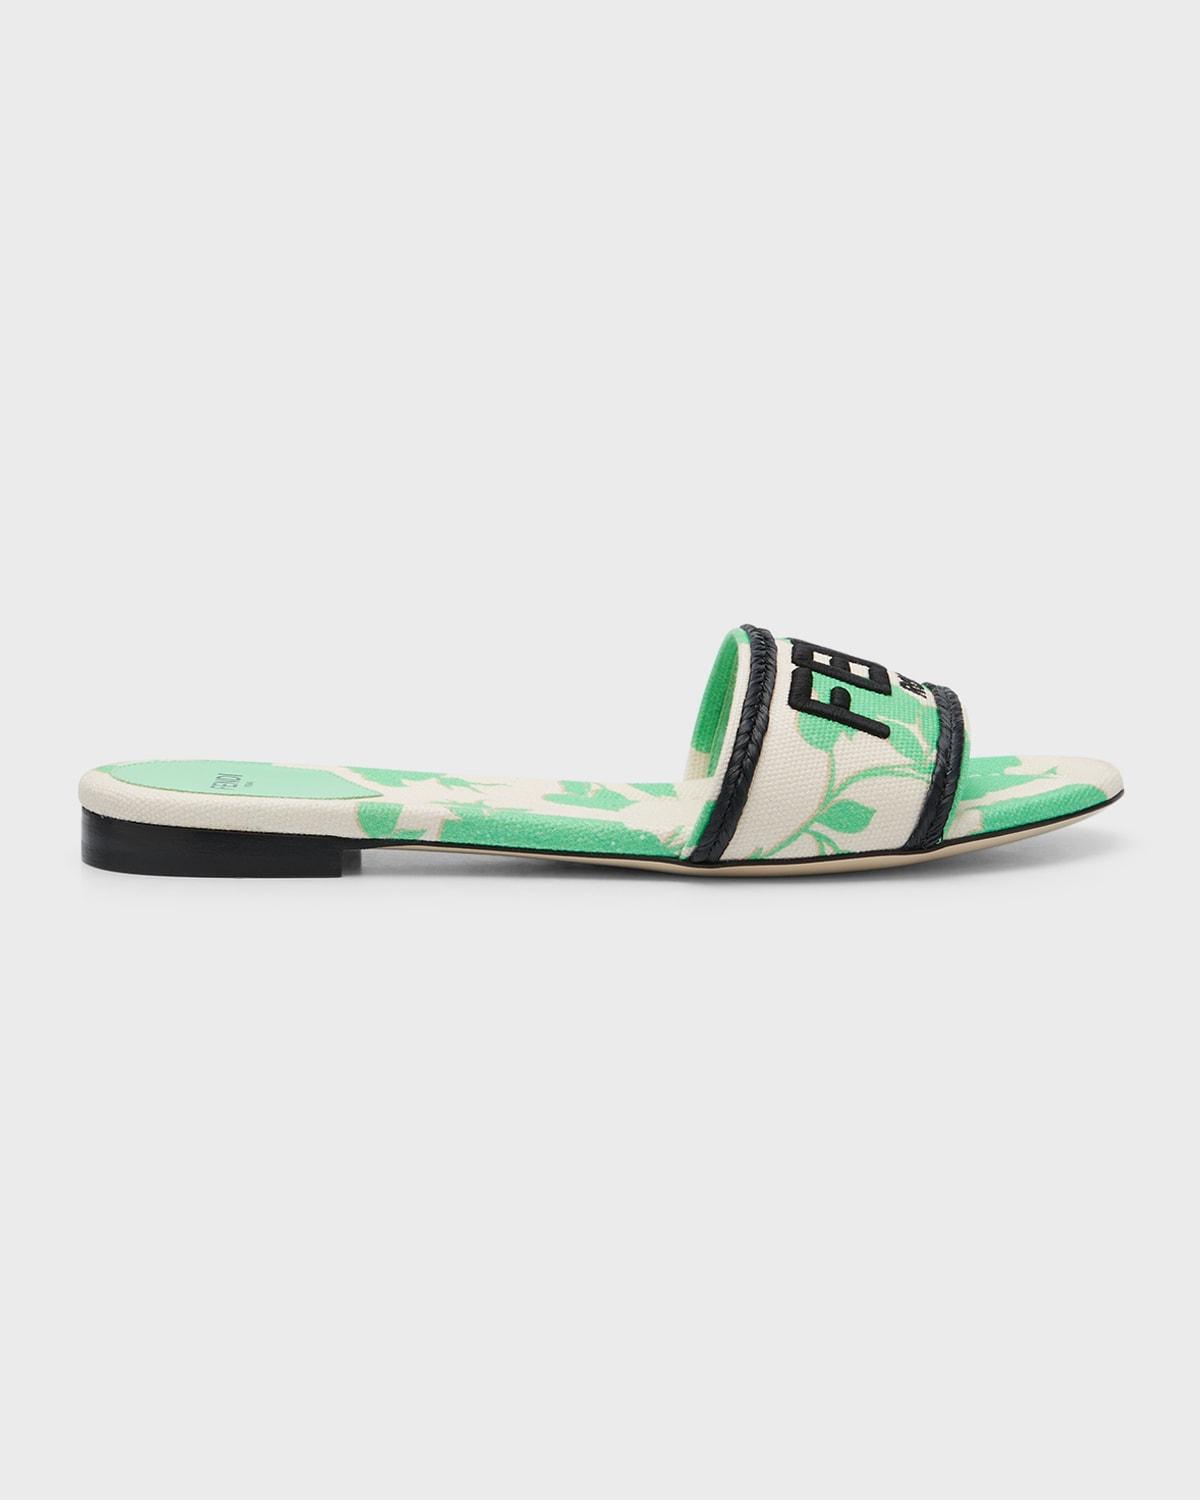 Fendi Floral Canvas Logo Slide Sandals in Green | Lyst